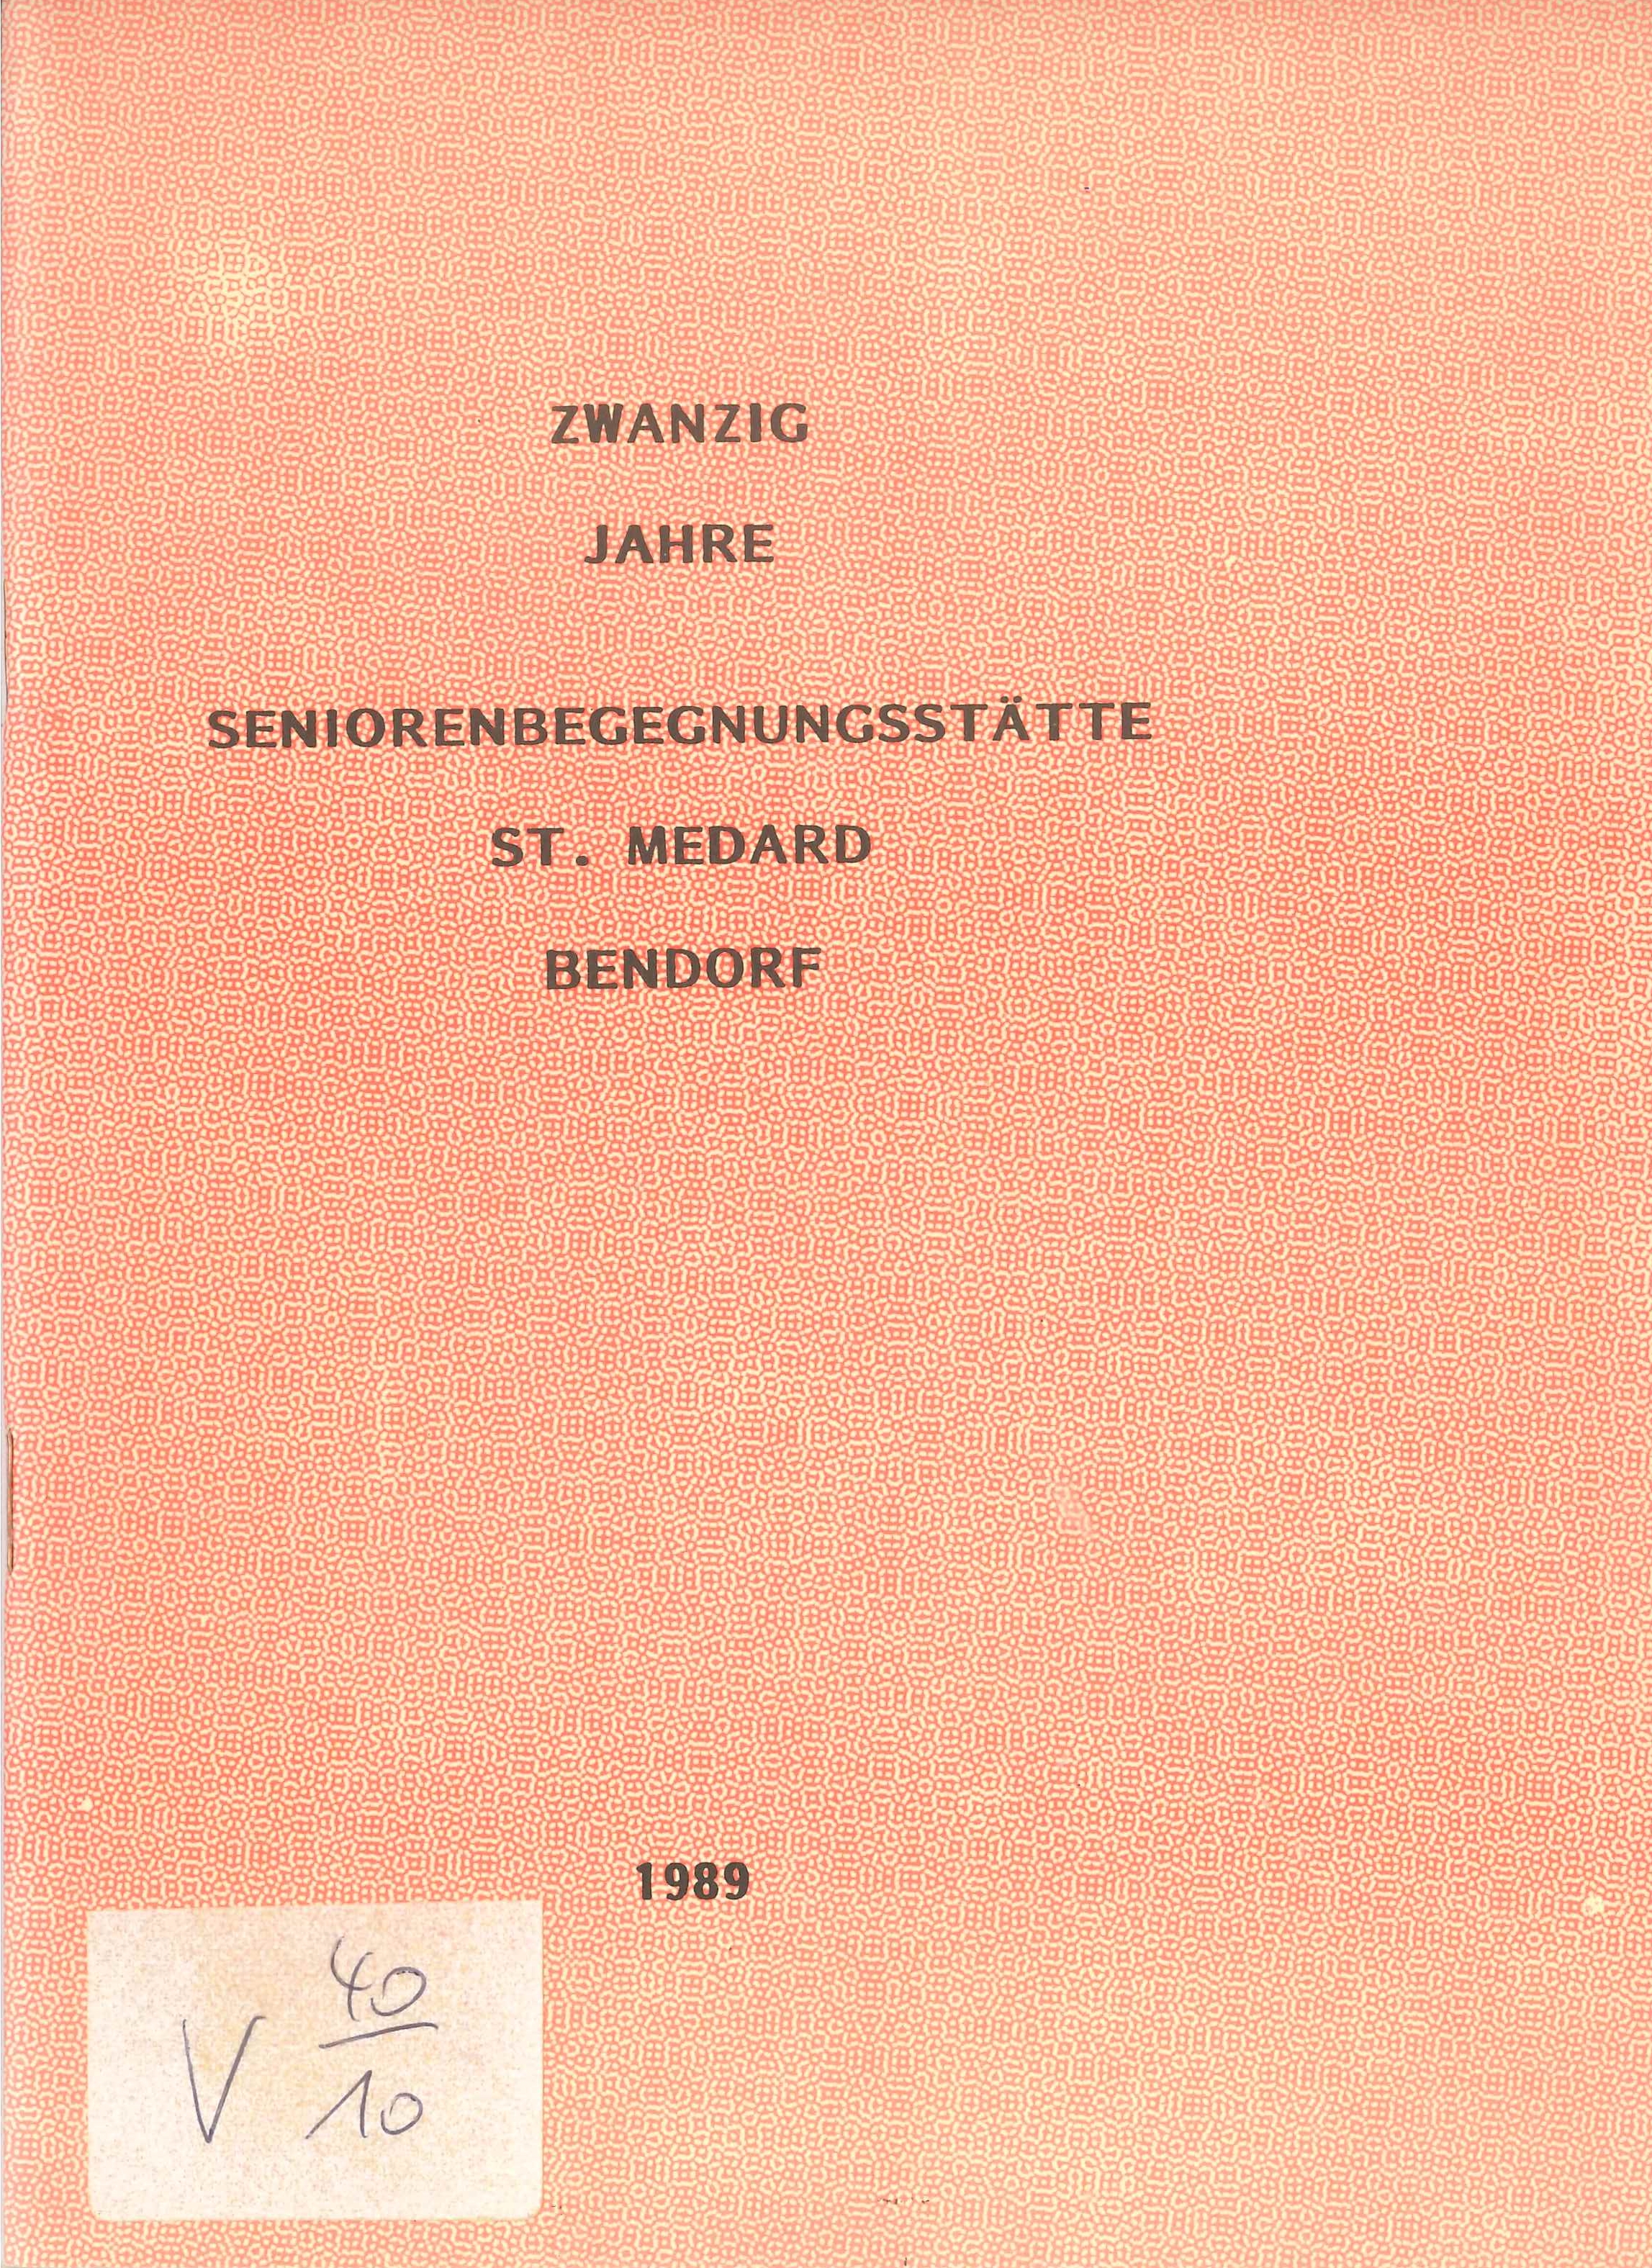 Festschrift Seniorenbegegnungsstätte St. Medard Bendorf, 1989 (Rheinisches Eisenkunstguss-Museum CC BY-NC-SA)